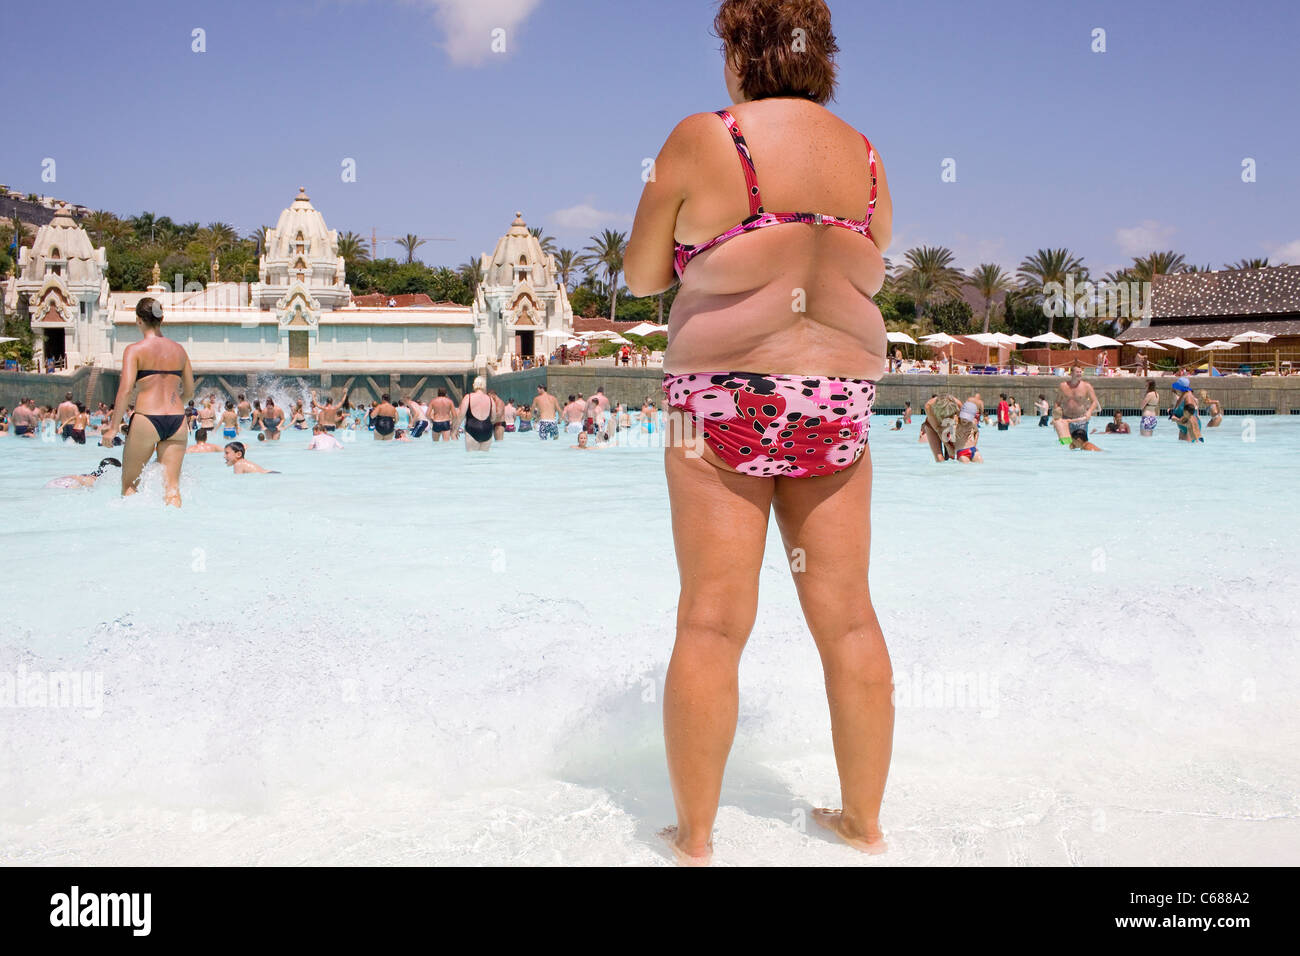 A fat woman in a bikini at Siam Park in Tenerife. Stock Photo